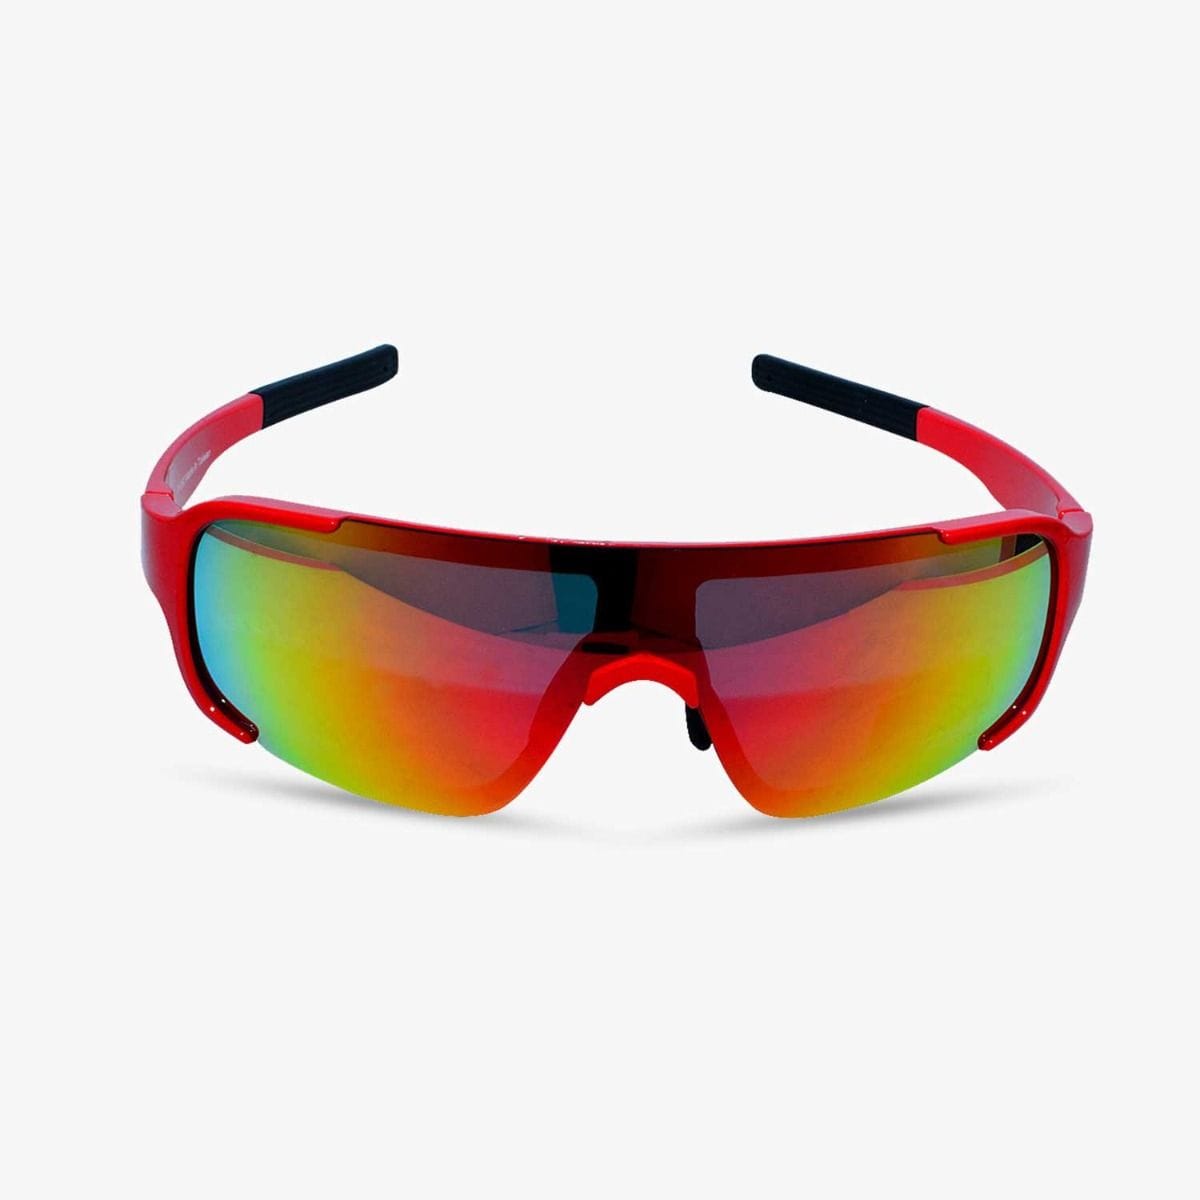 WSC Accessories DSC Cricket Polarized Speed Sunglassess